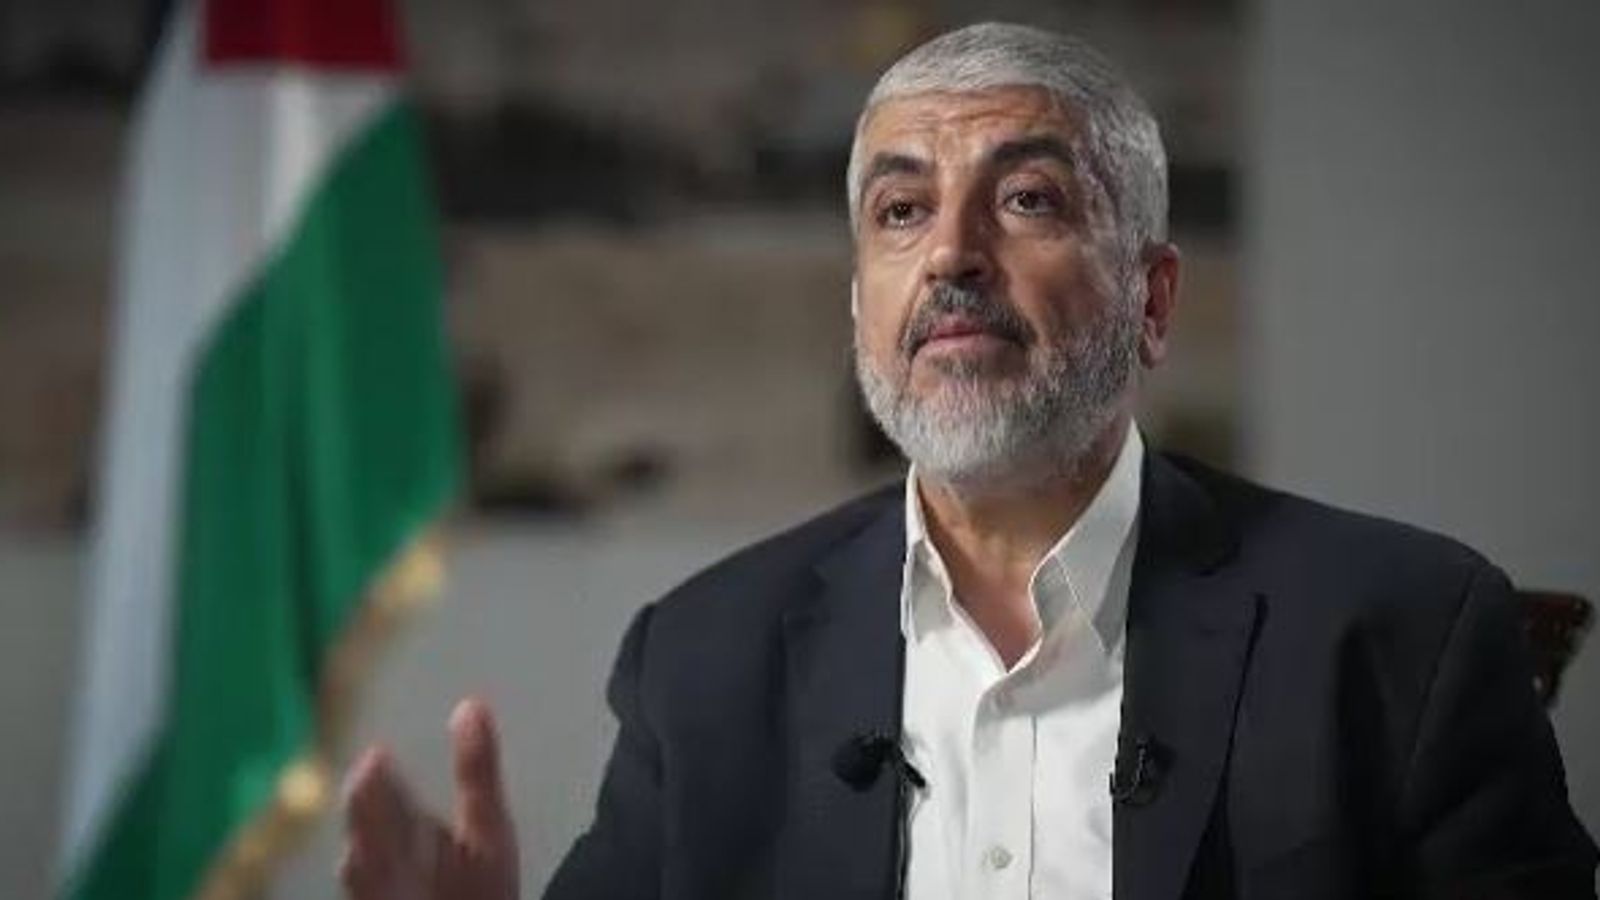 Civilian hostages will be freed if Israel stops bombardment of Gaza, senior Hamas leader says